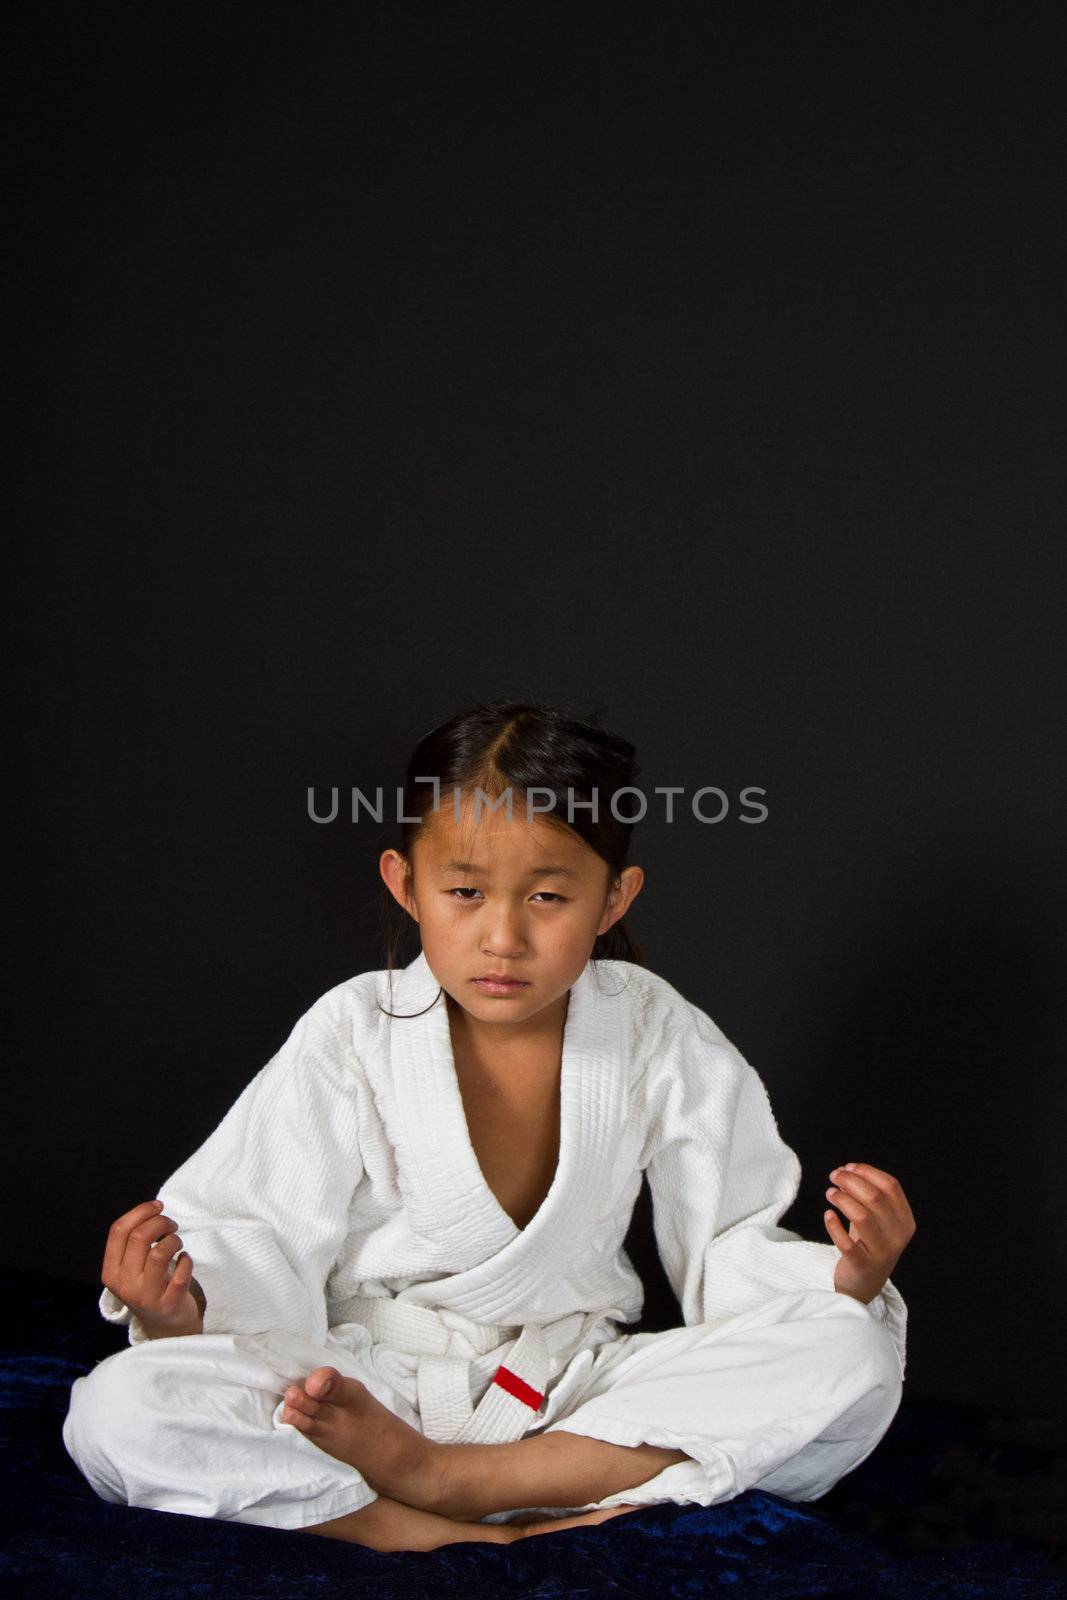 Karate kid by jeancliclac